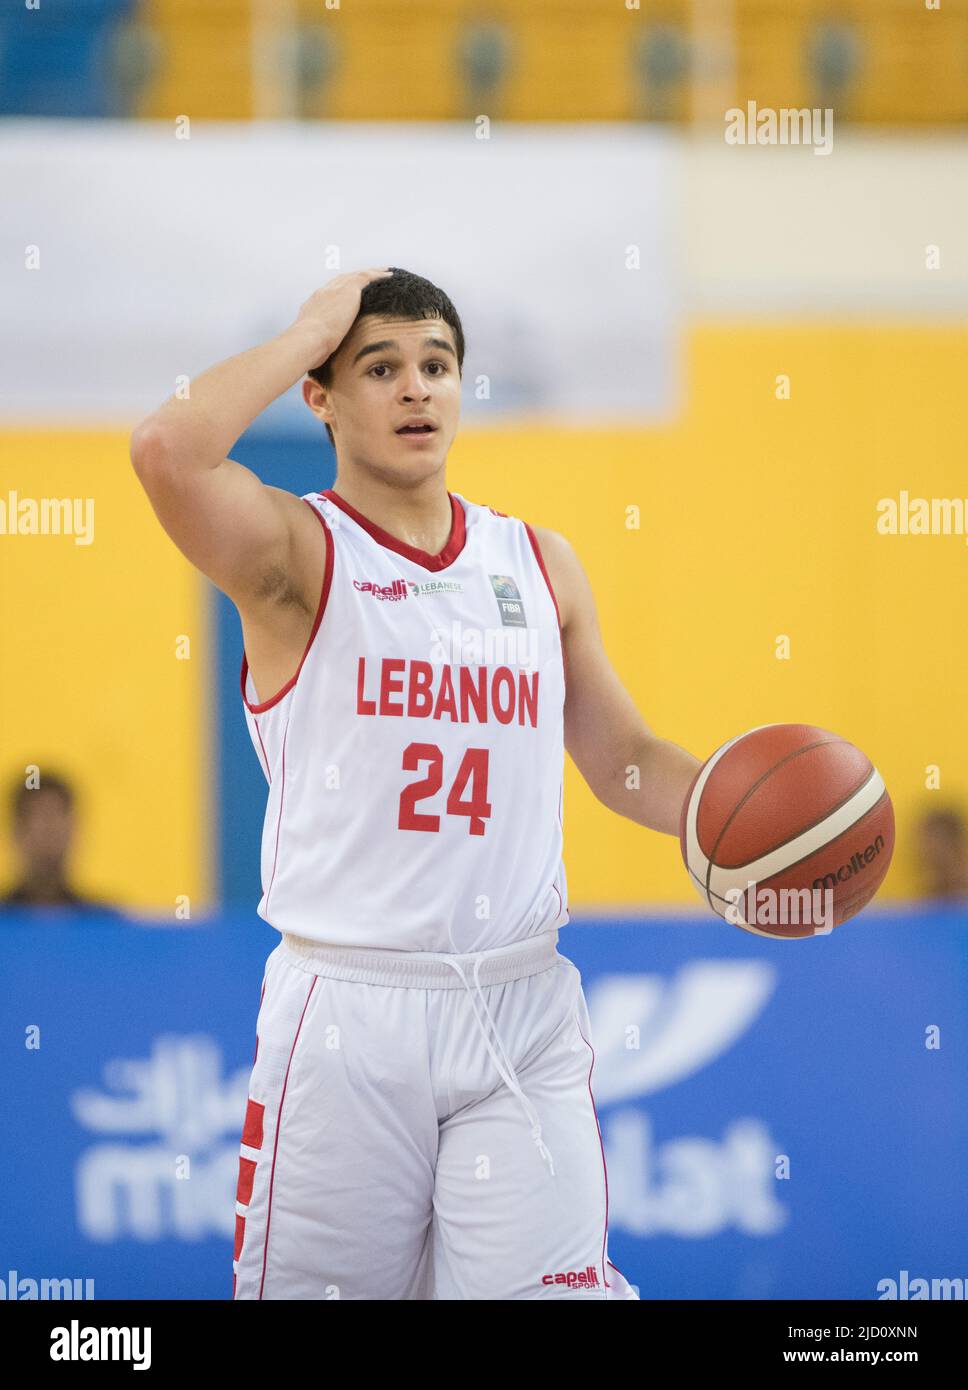 Doha, Qatar. 16th juin 2022. Jad Tabbara du Liban l'équipe de basket-ball  se remporte lors du match de championnat asiatique 2022 de la FIBA U16  entre le Liban et le Qatar qui